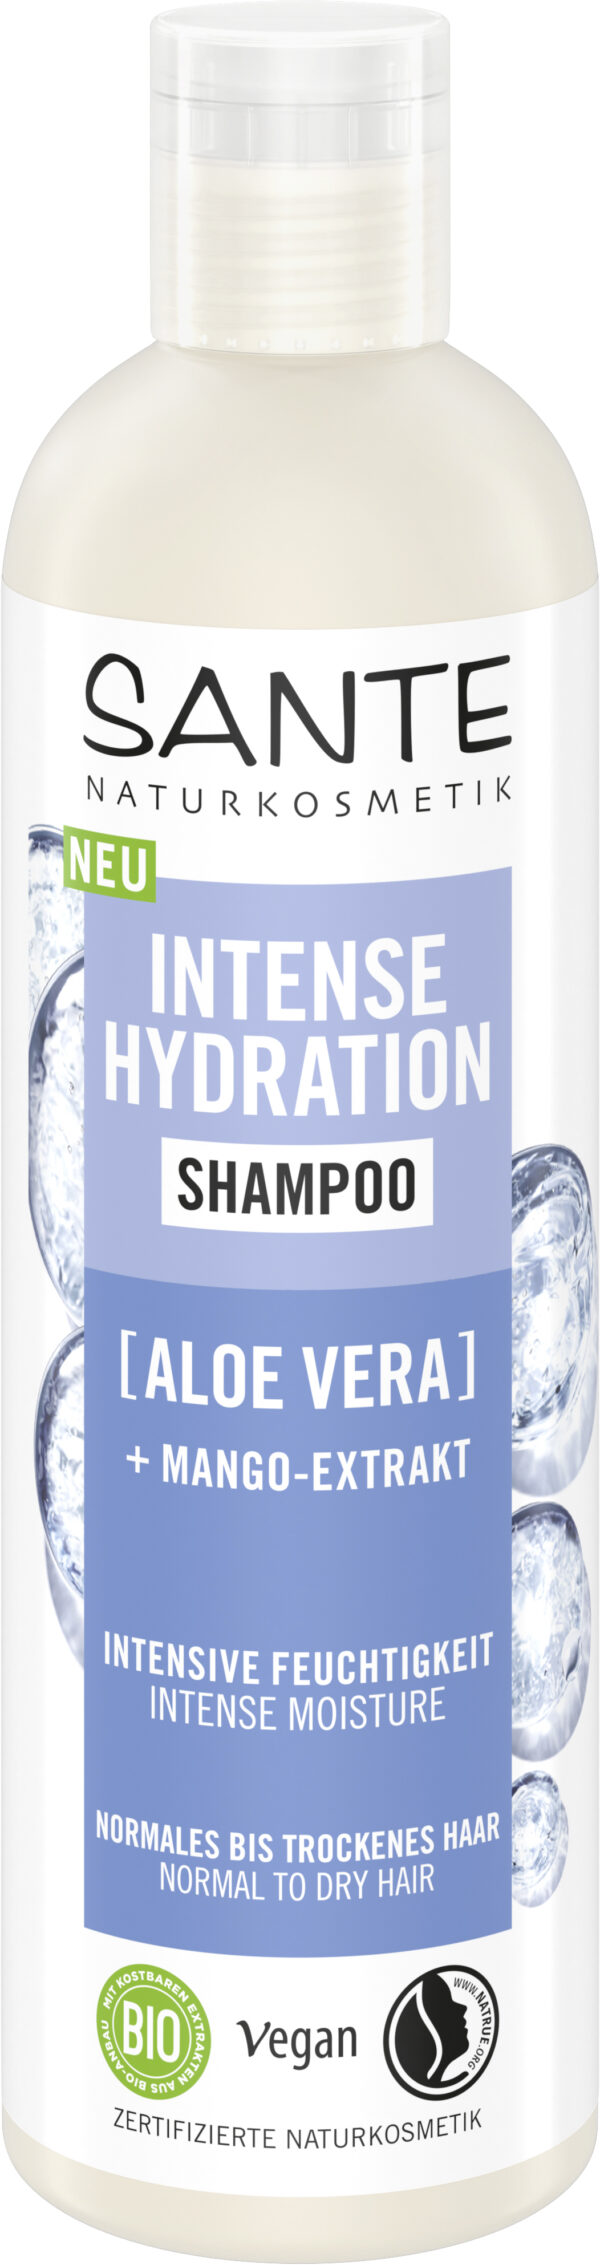 Šampon INTENSE HYDRATION 250 ml